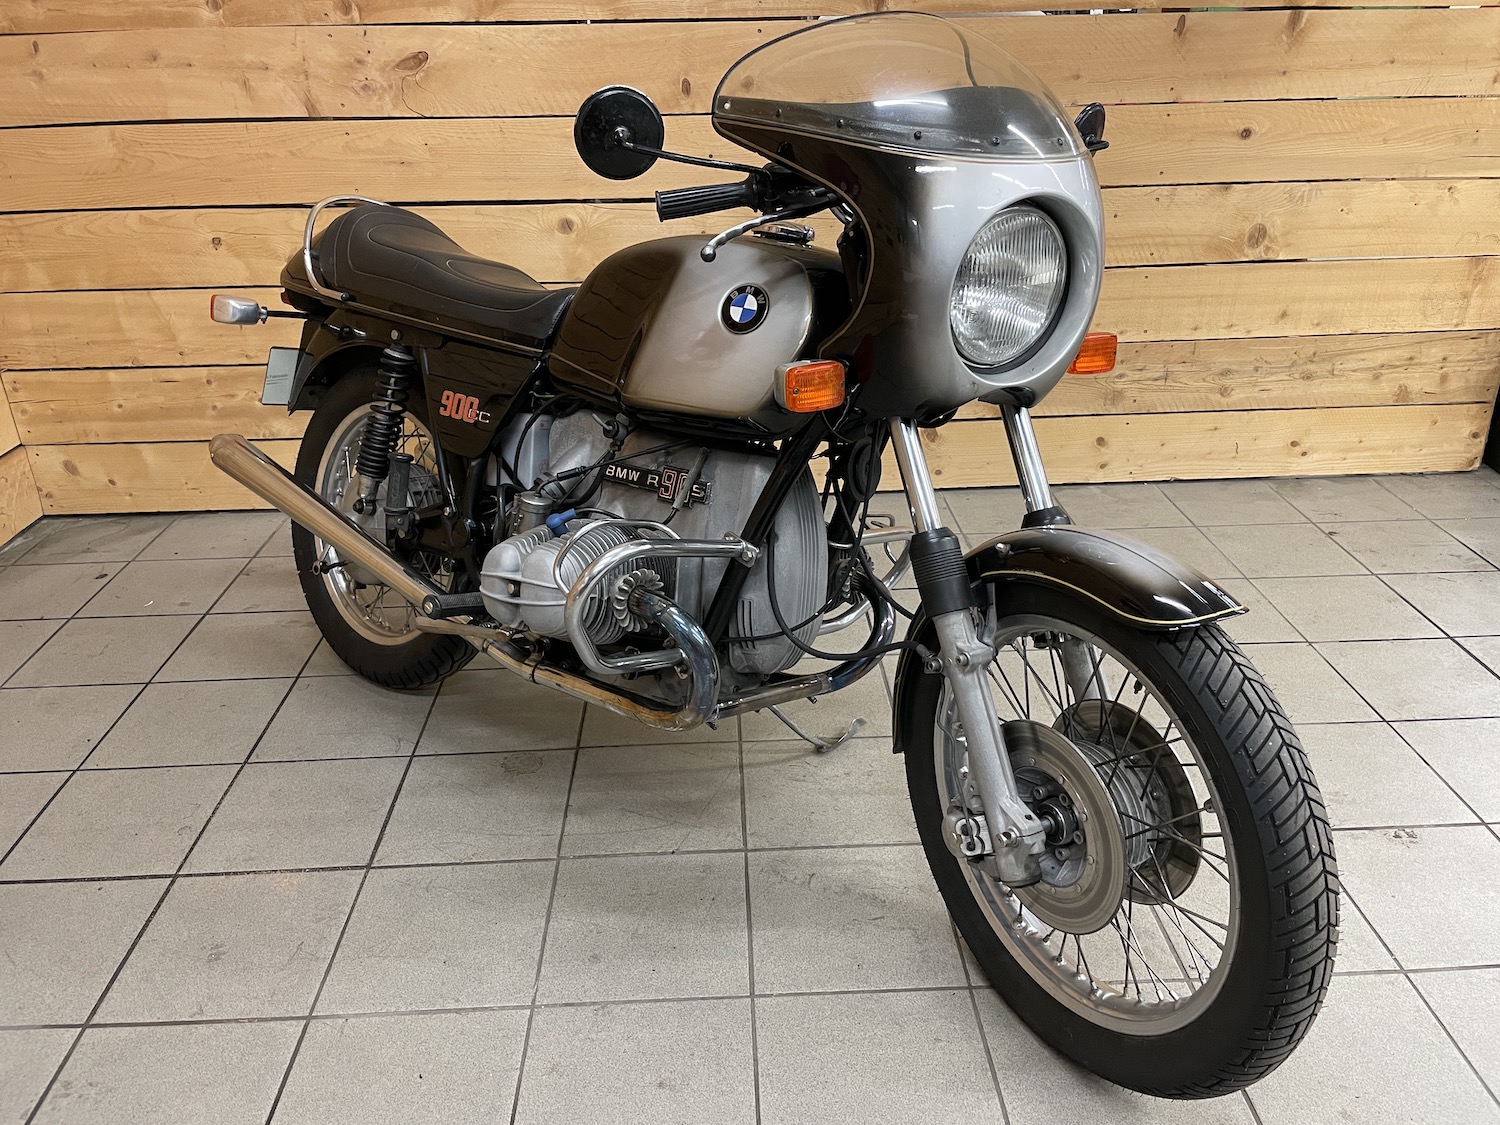 BMW_R90s_74_cezanne_classic_motorcycle_7_111-127.jpg